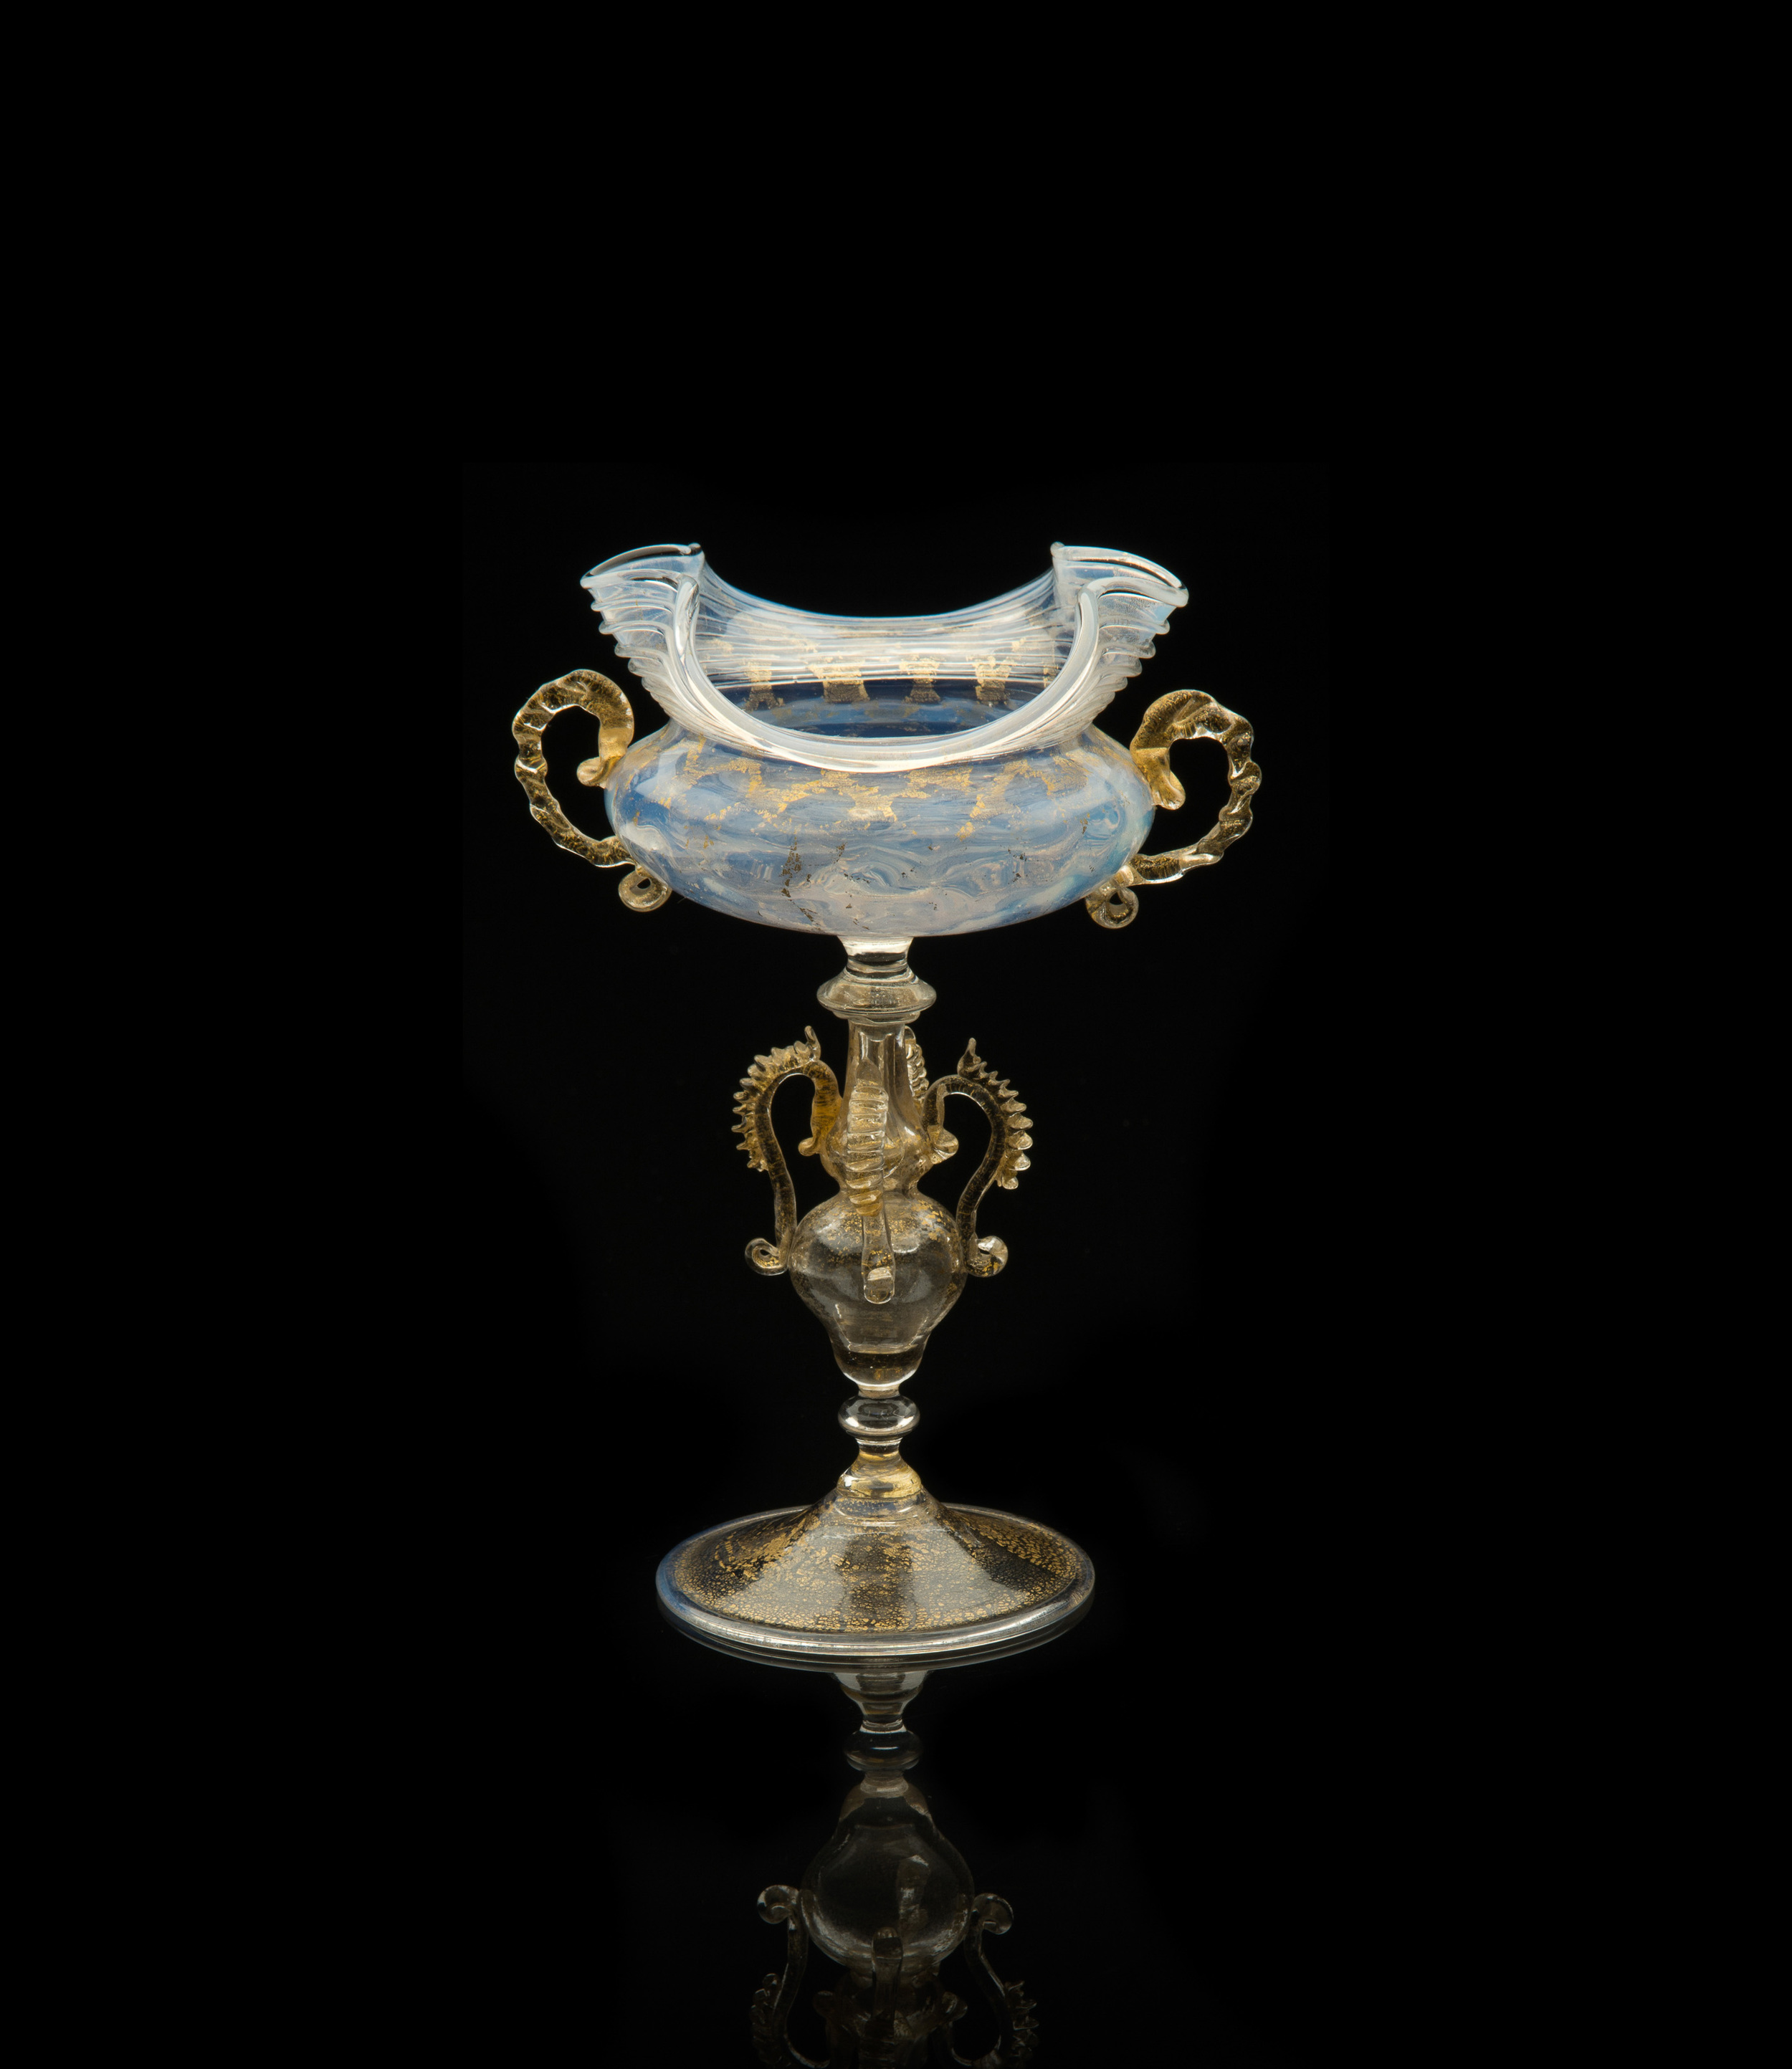  Salviati and Company,&nbsp; Girasol&nbsp;  Goblet with Ruffled Rim&nbsp; (circa 1875, glass, 6 1/4 inches), VV.542 